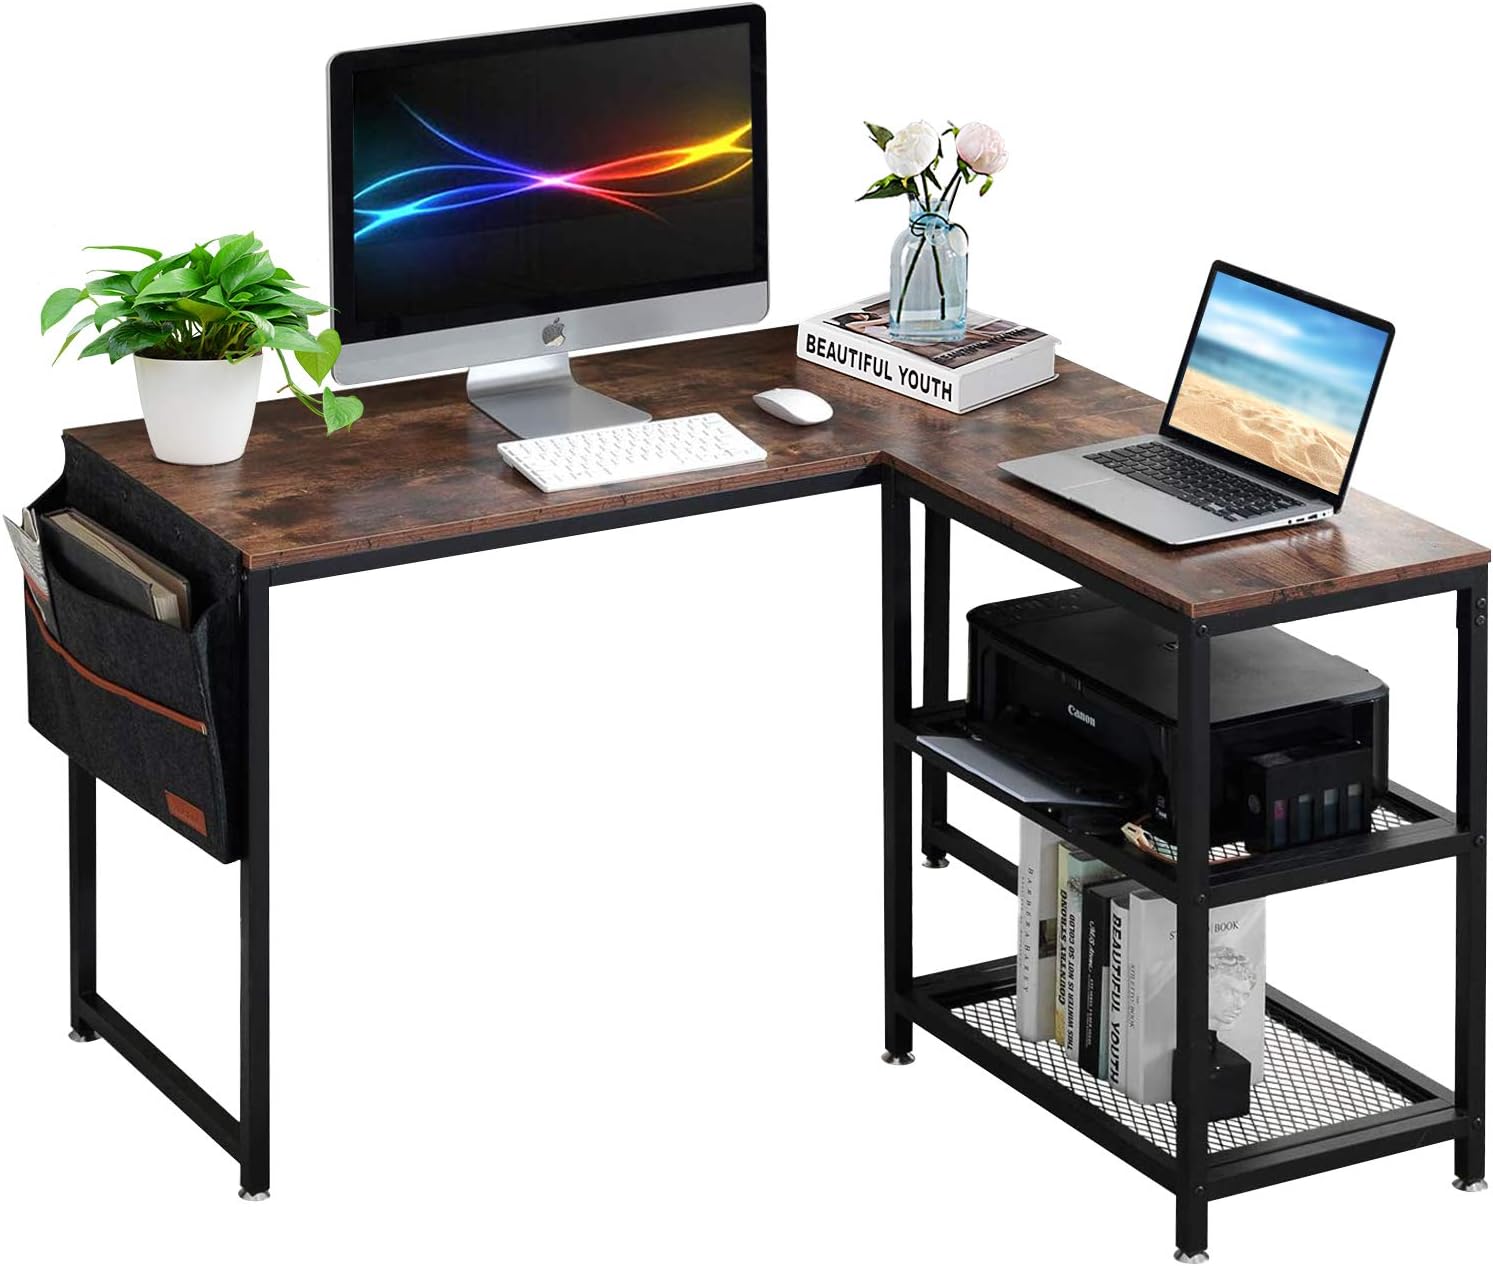 VECELO Computer Desk 47" L Shaped Heavy Duty Home Office Table